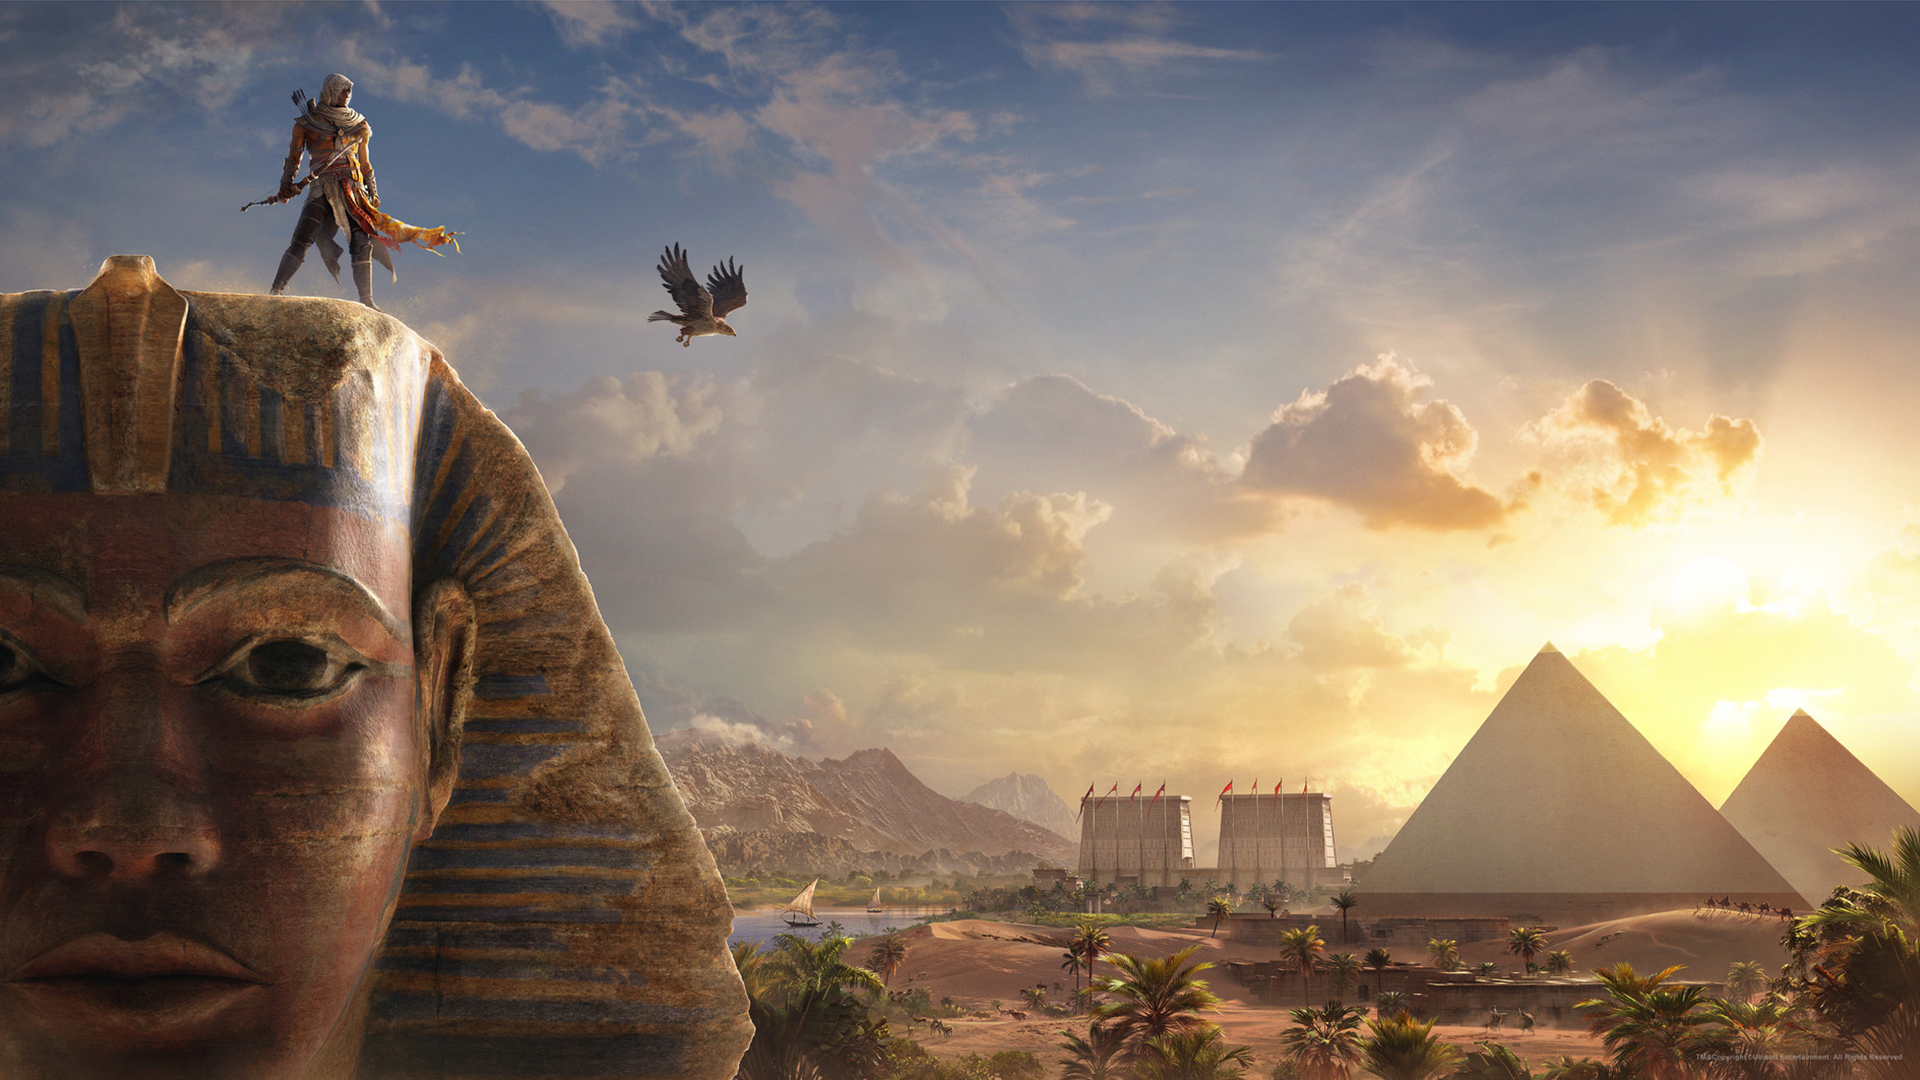 Bayek Sphinx Assassins Creed Origins739159124 - Bayek Sphinx Assassins Creed Origins - Windrunner, Sphinx, Origins, Creed, Bayek, Assassins